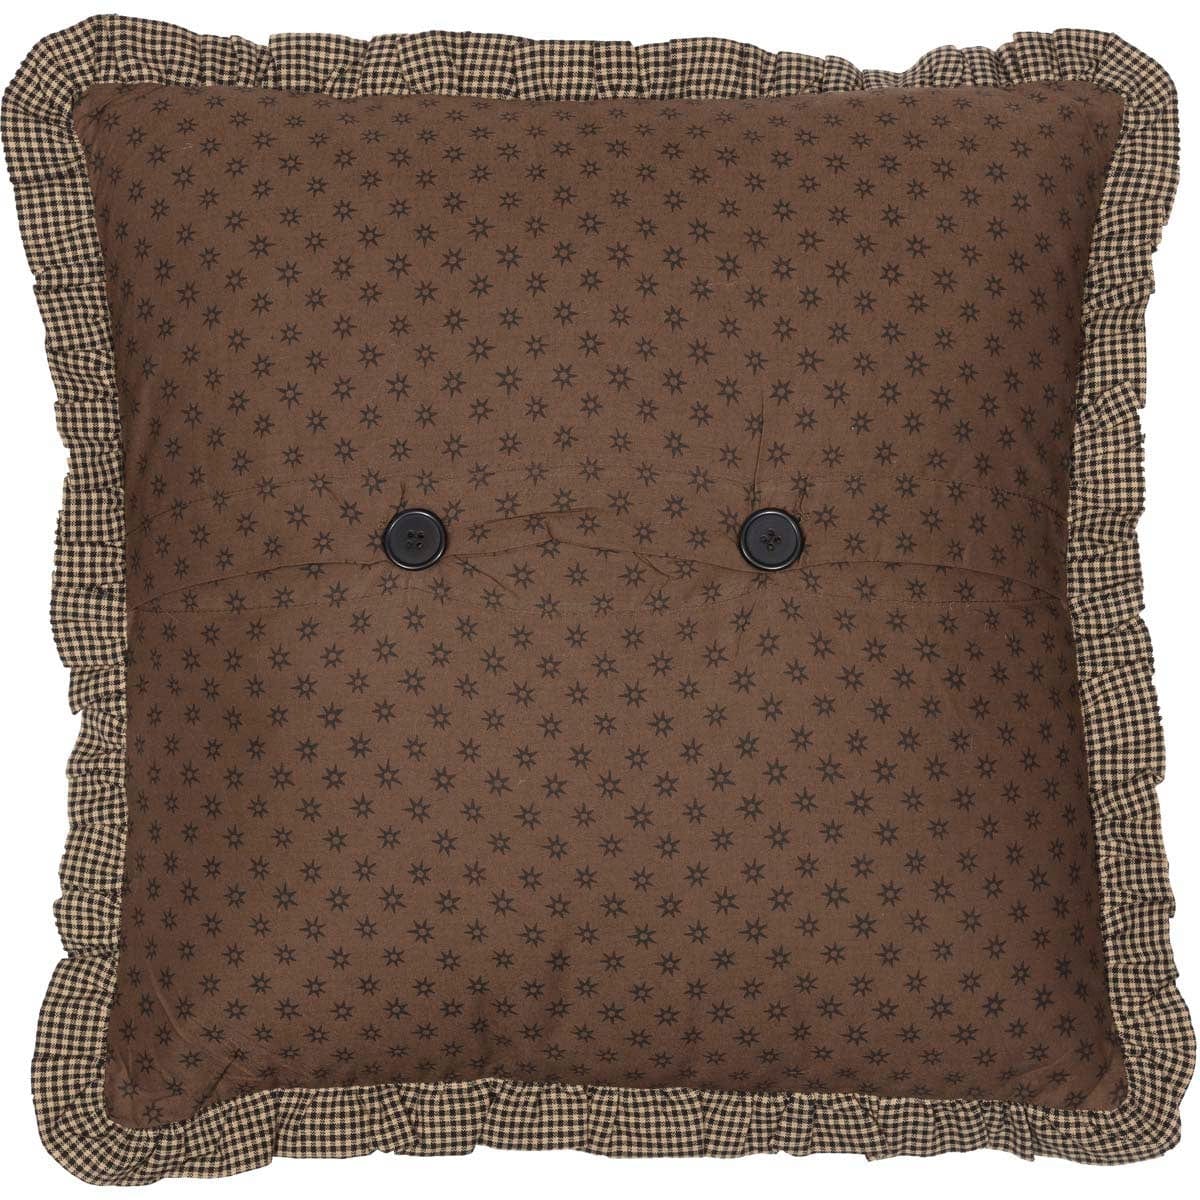 Bingham Star Fabric Pillow with Applique Stars 16x16